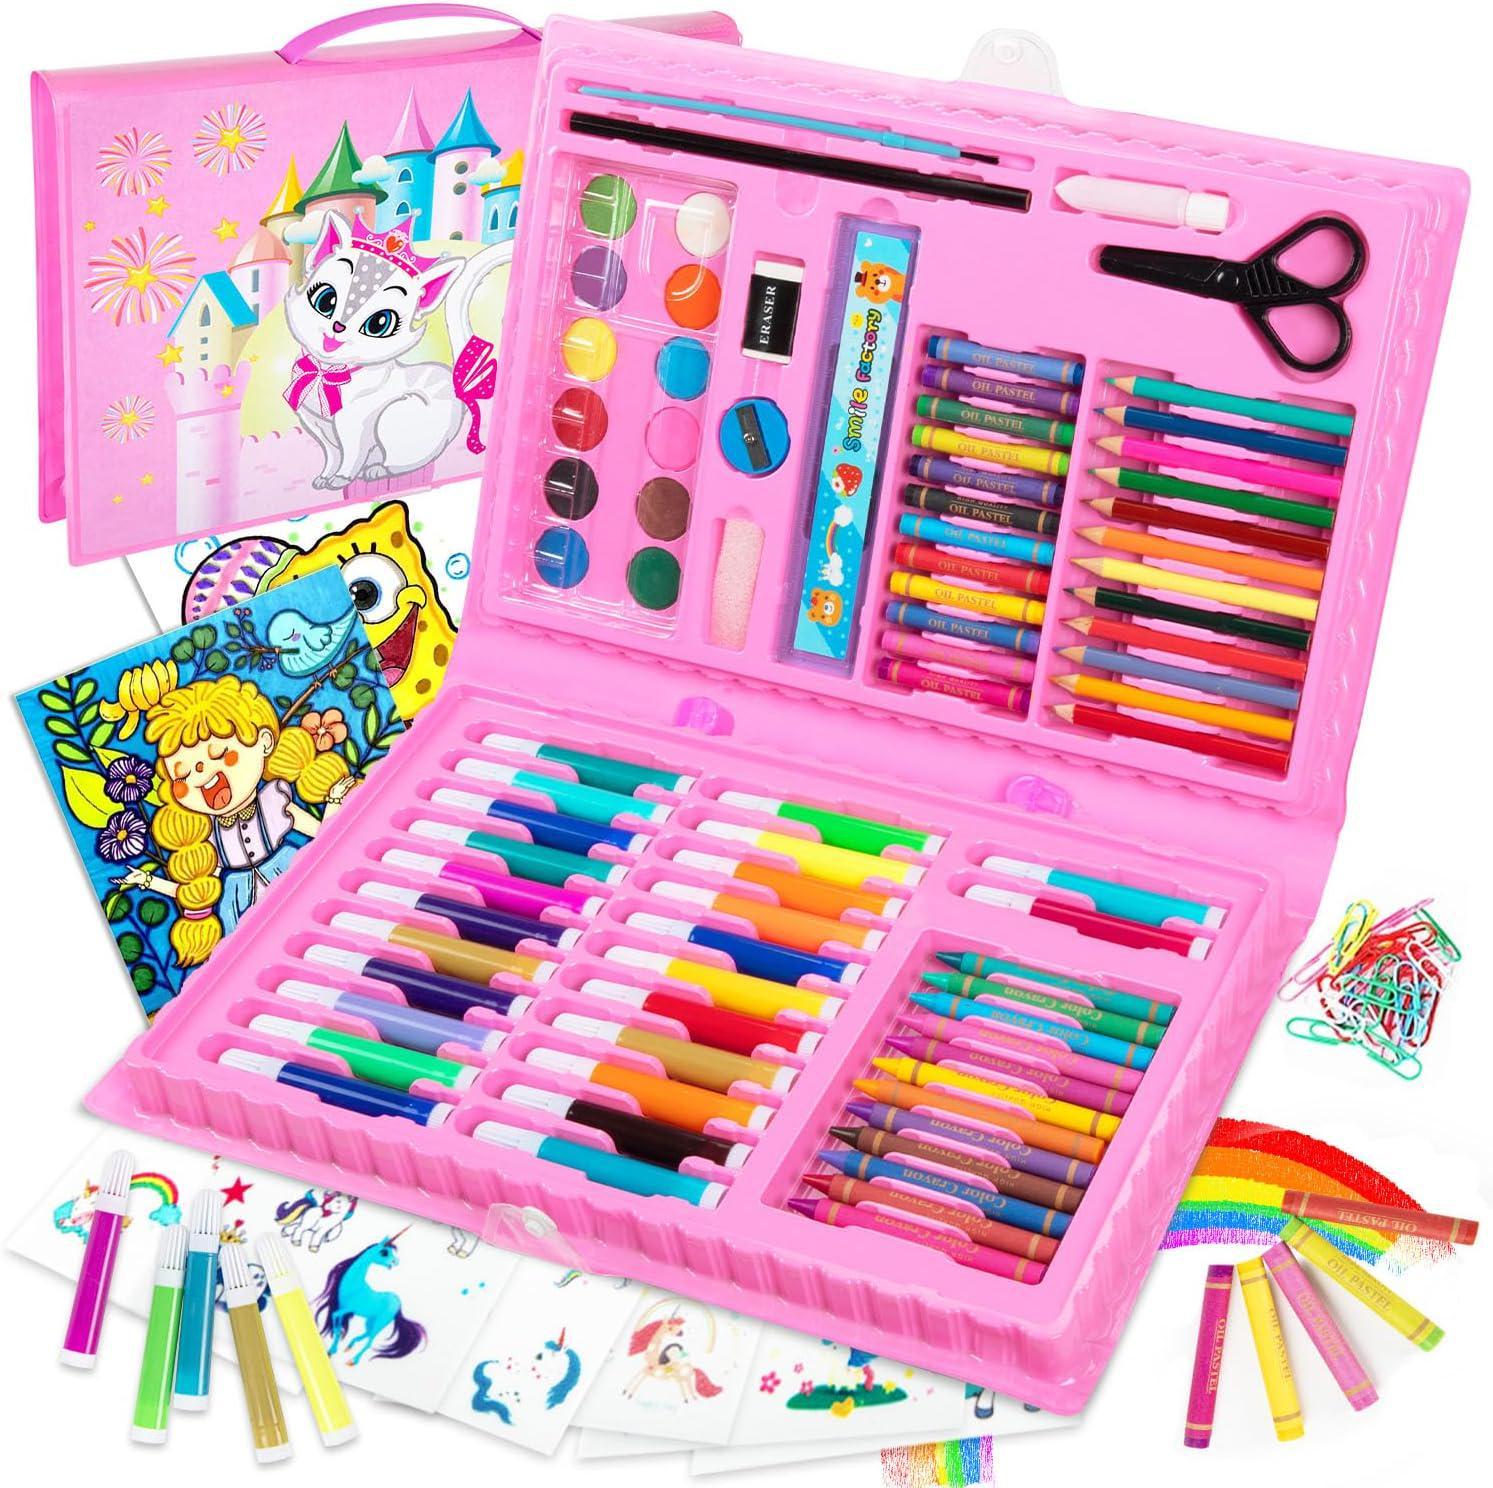  iBayam Art Supplies, 139-Pack Drawing Kit Painting Art Set Art  Kits Gifts Box, Arts and Crafts for Kids Girls Boys, with Coloring Book,  Crayons, Pastels, Pencils, Watercolor Pens (Pink)